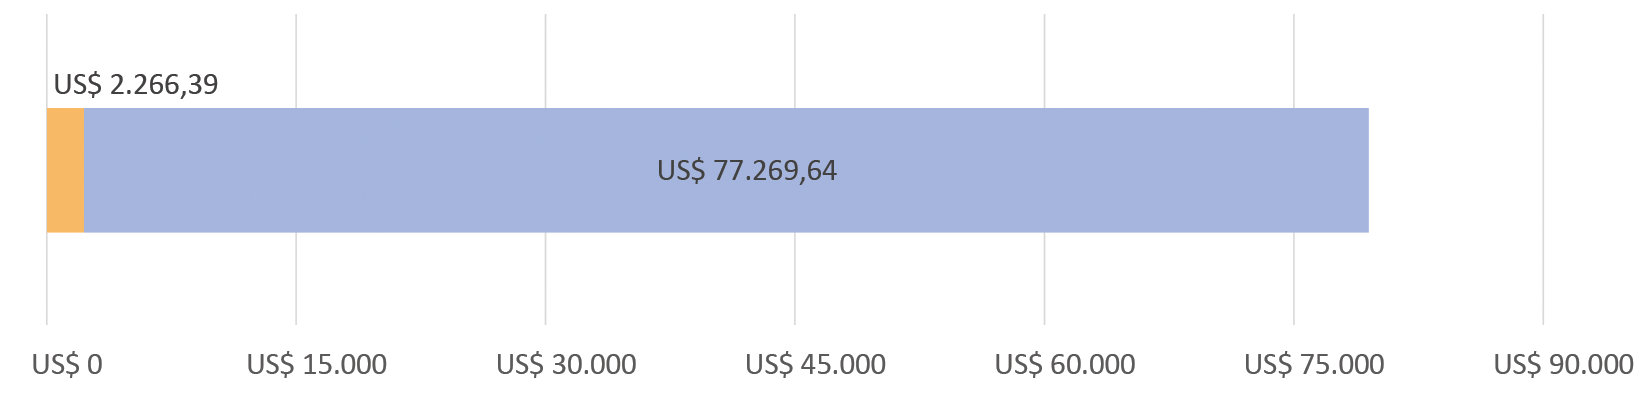 US$2.266,39 gastos; US$77.269,64 restantes